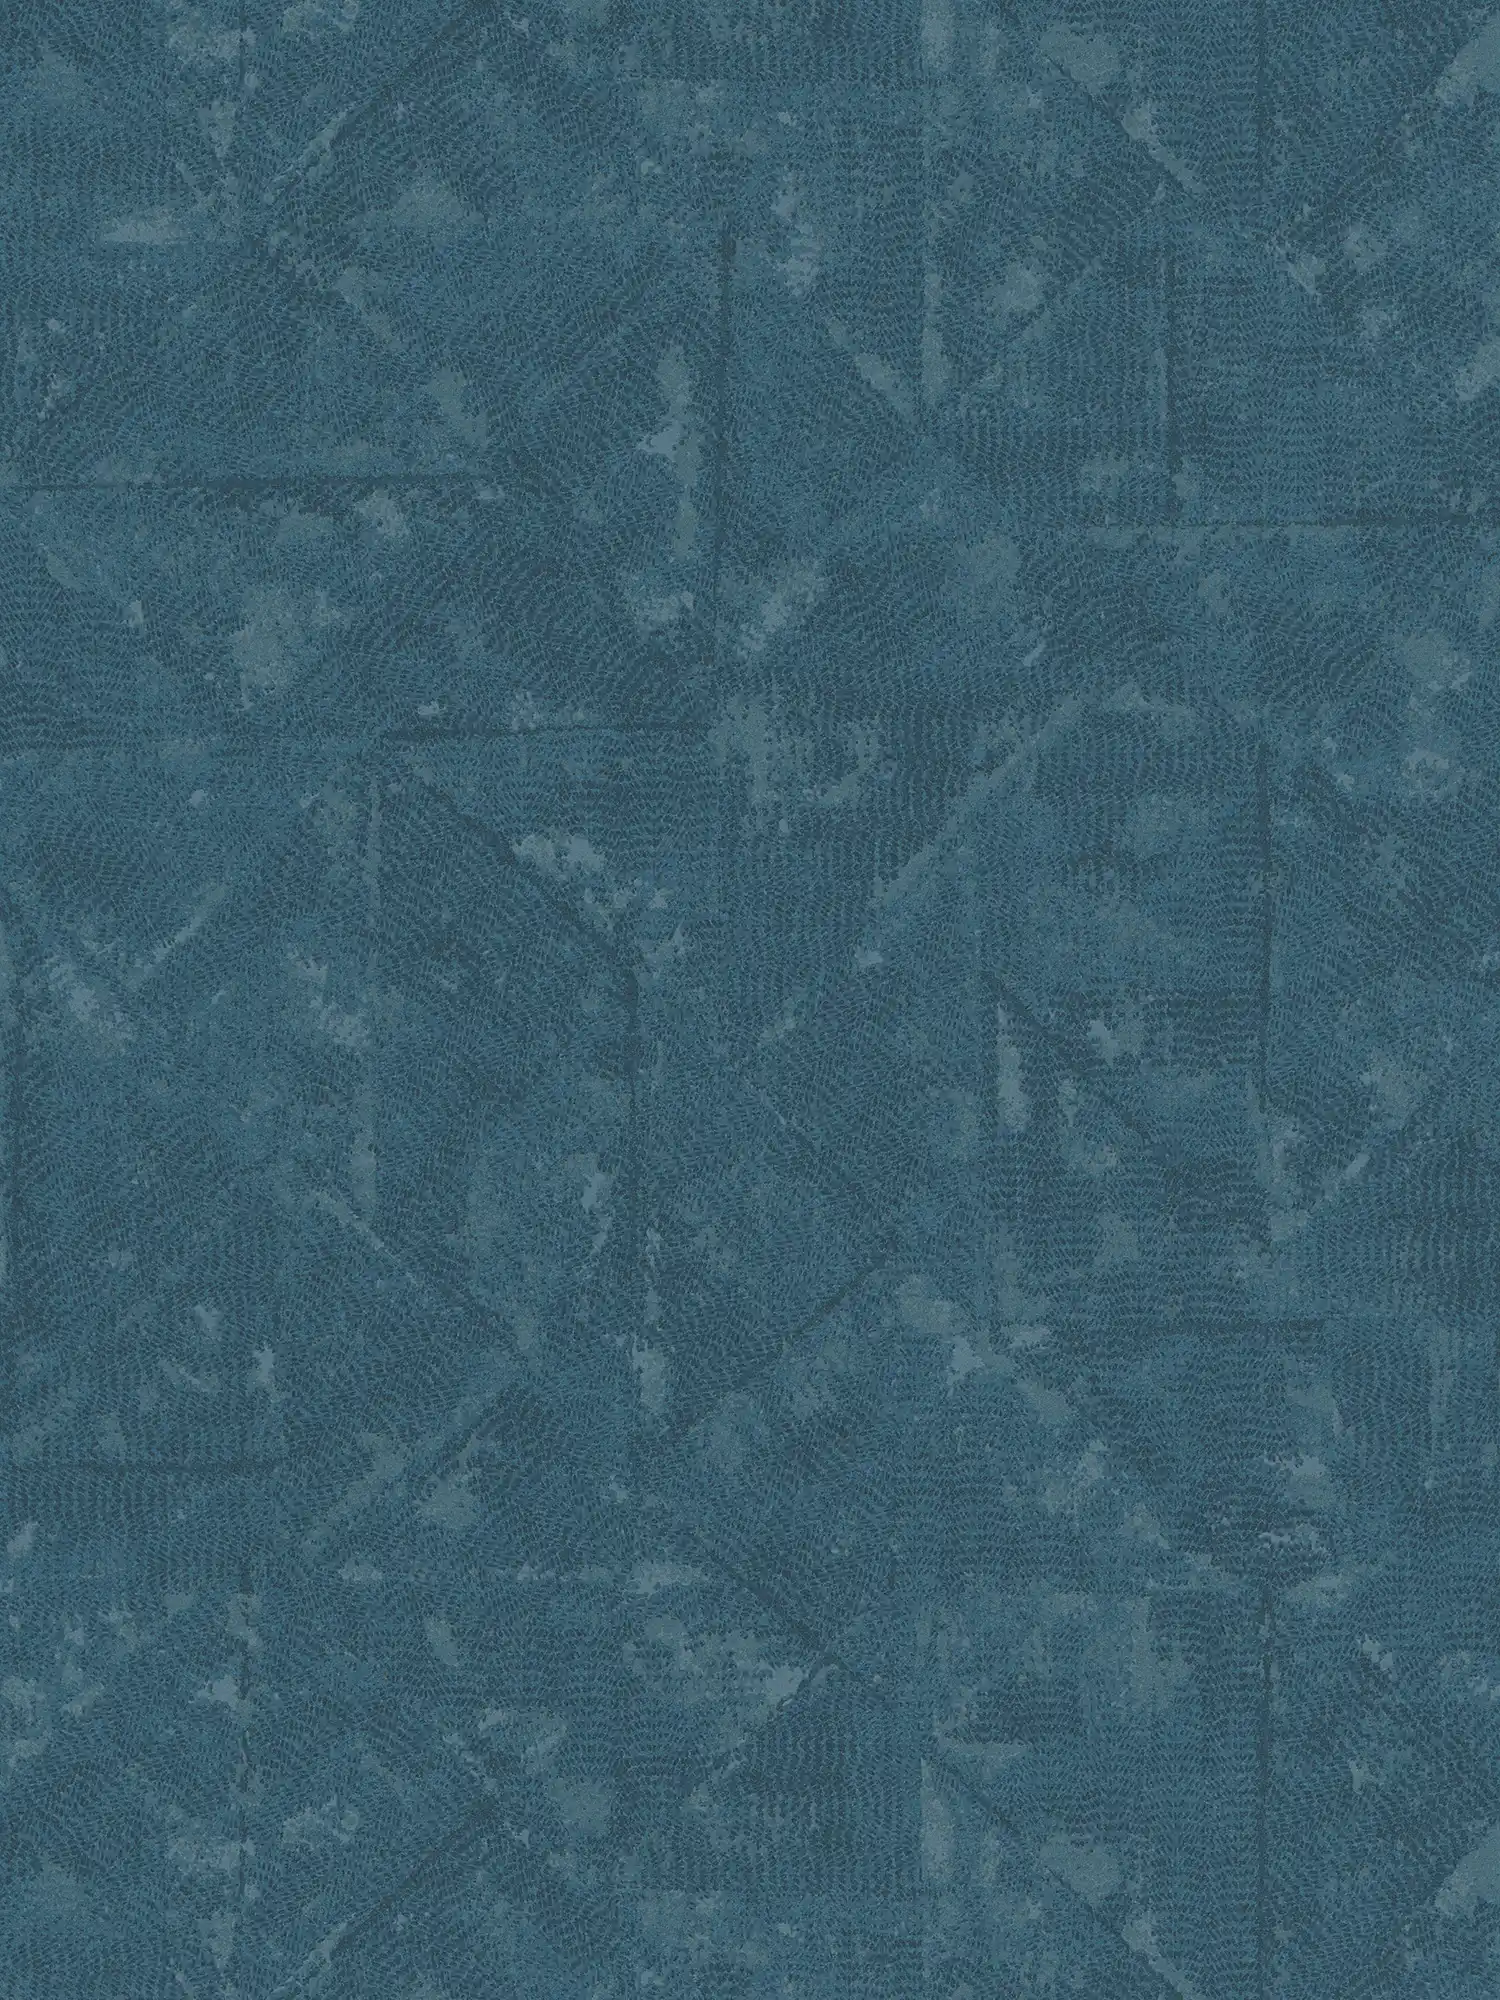 Petrolfarbene Vliestapete asymmetrische Details – Blau, Grau
